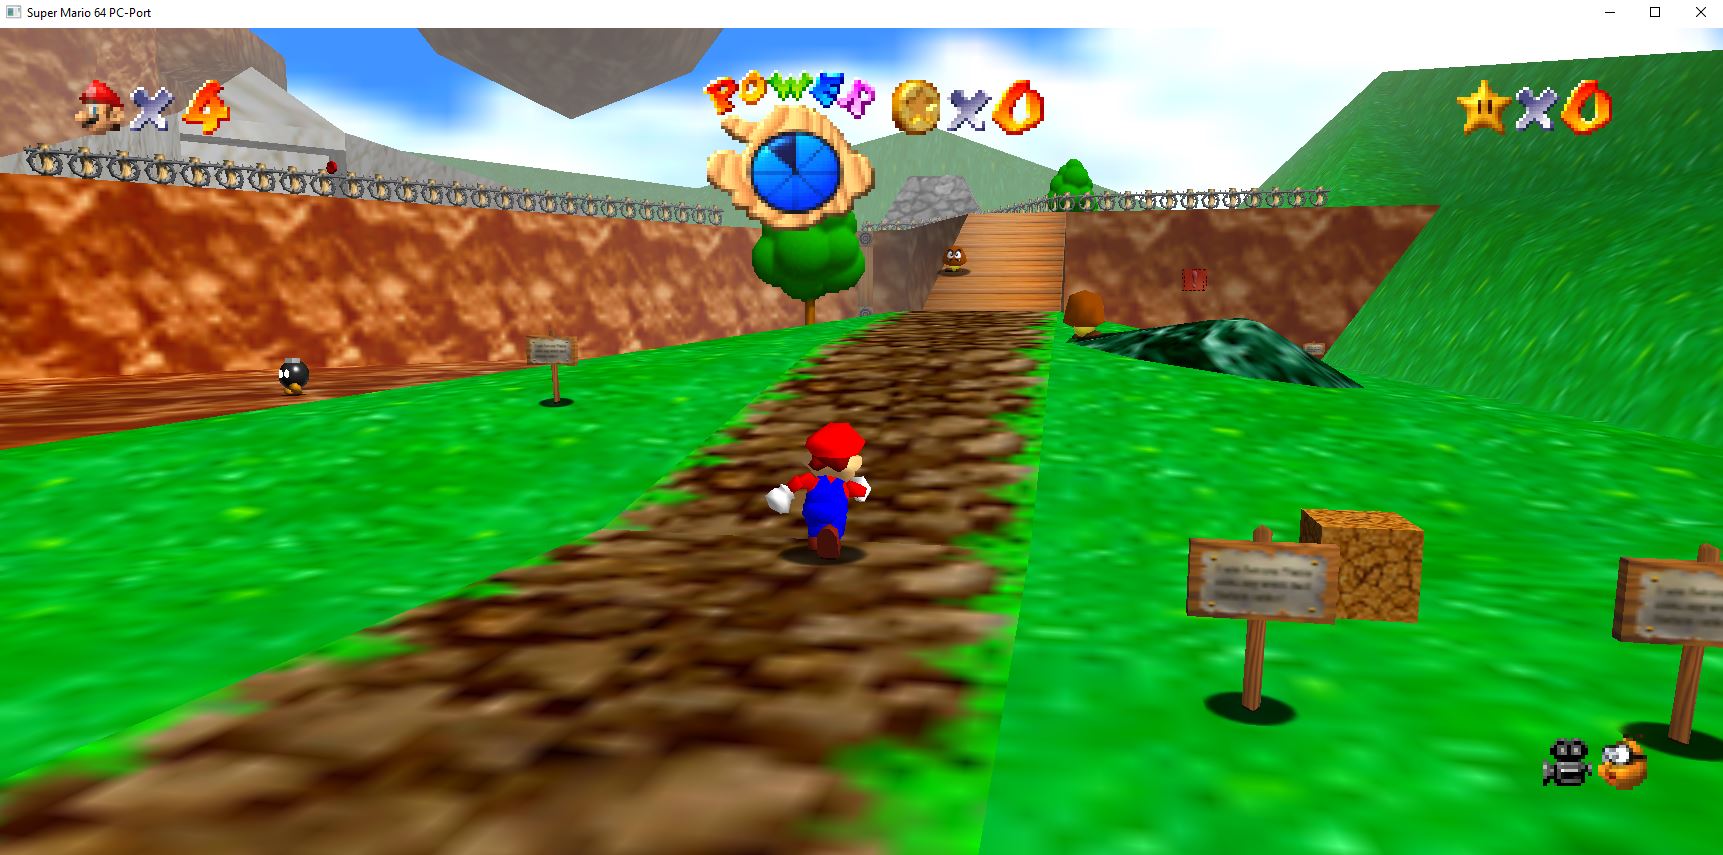 New Mario 64 PC port runs at native 4K on DirectX12, Unreal Engine 4